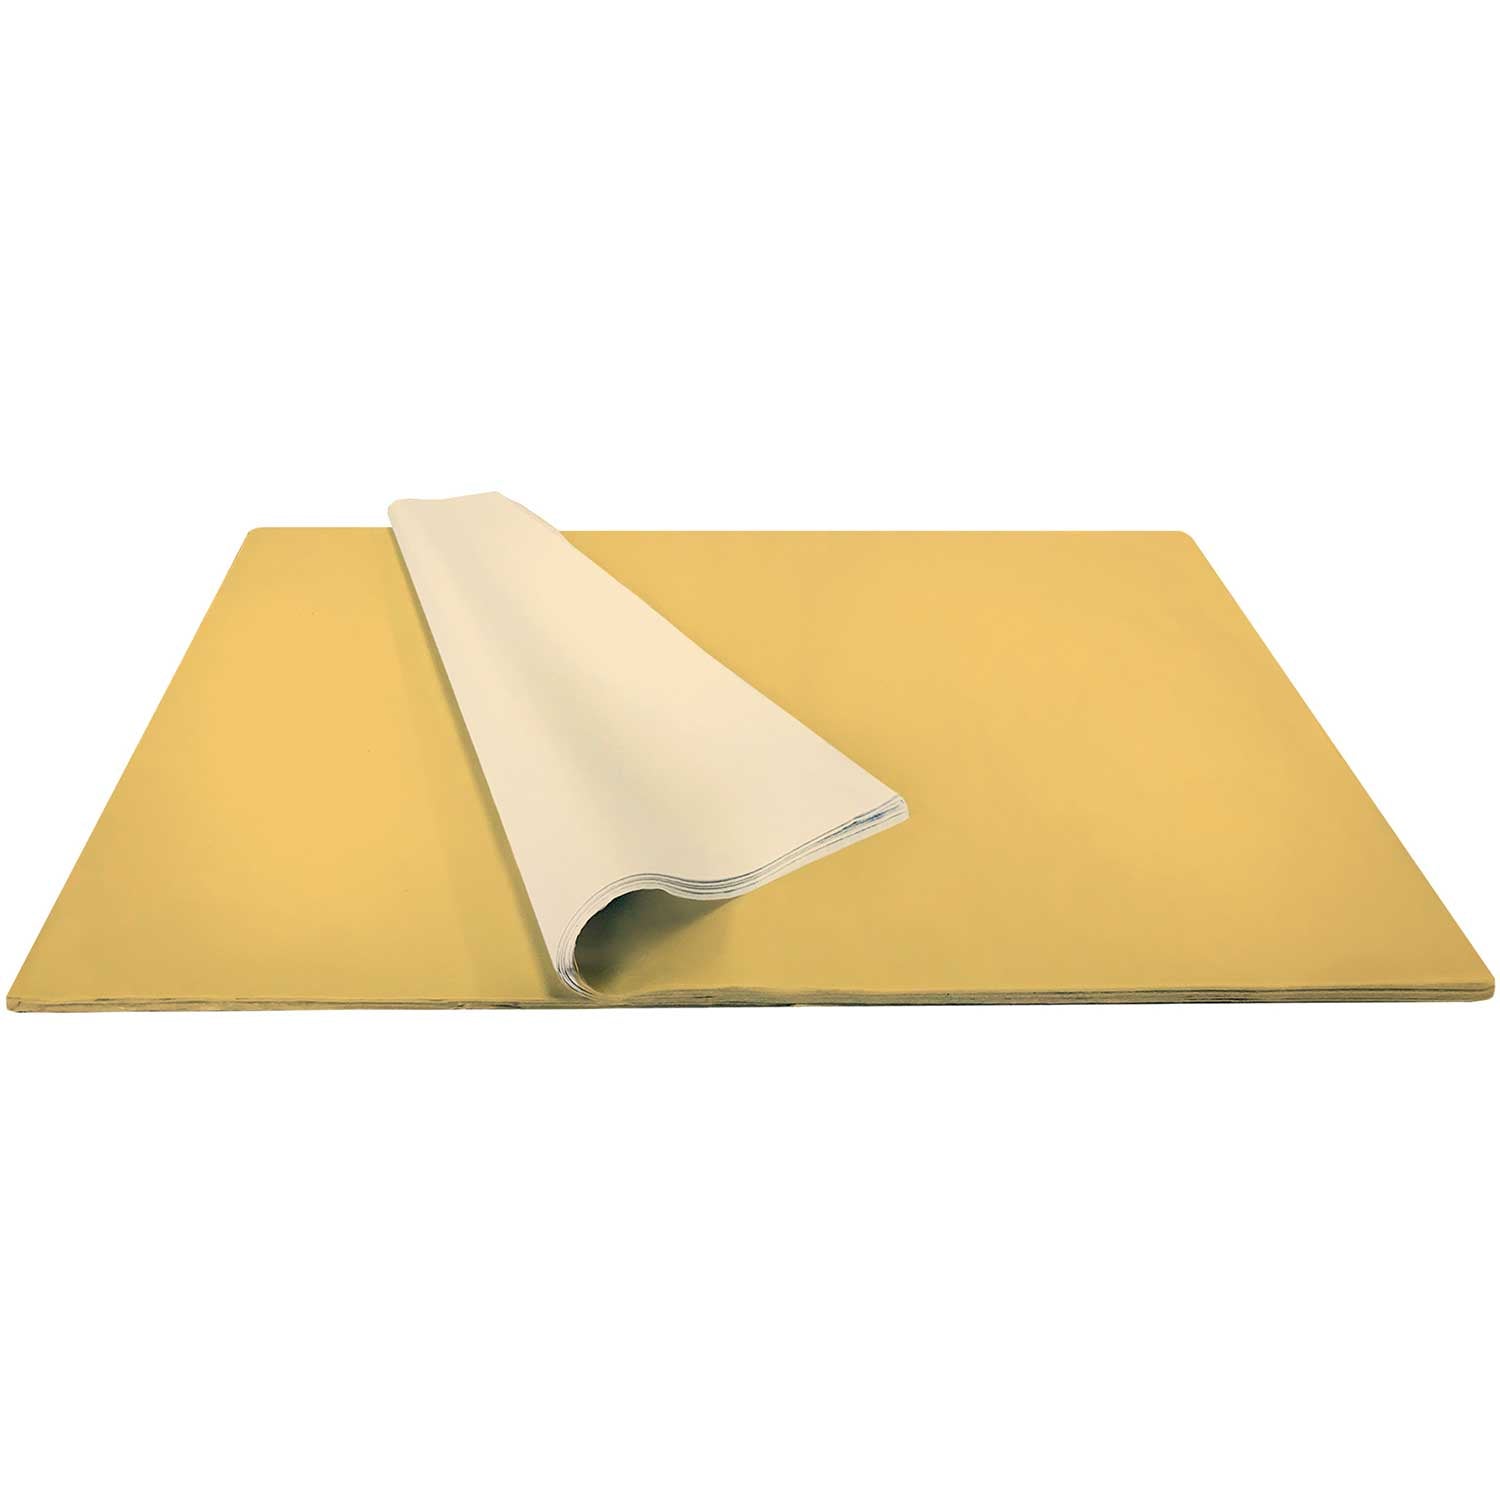 Pastel Orange Gift Tissue Paper – Present Paper